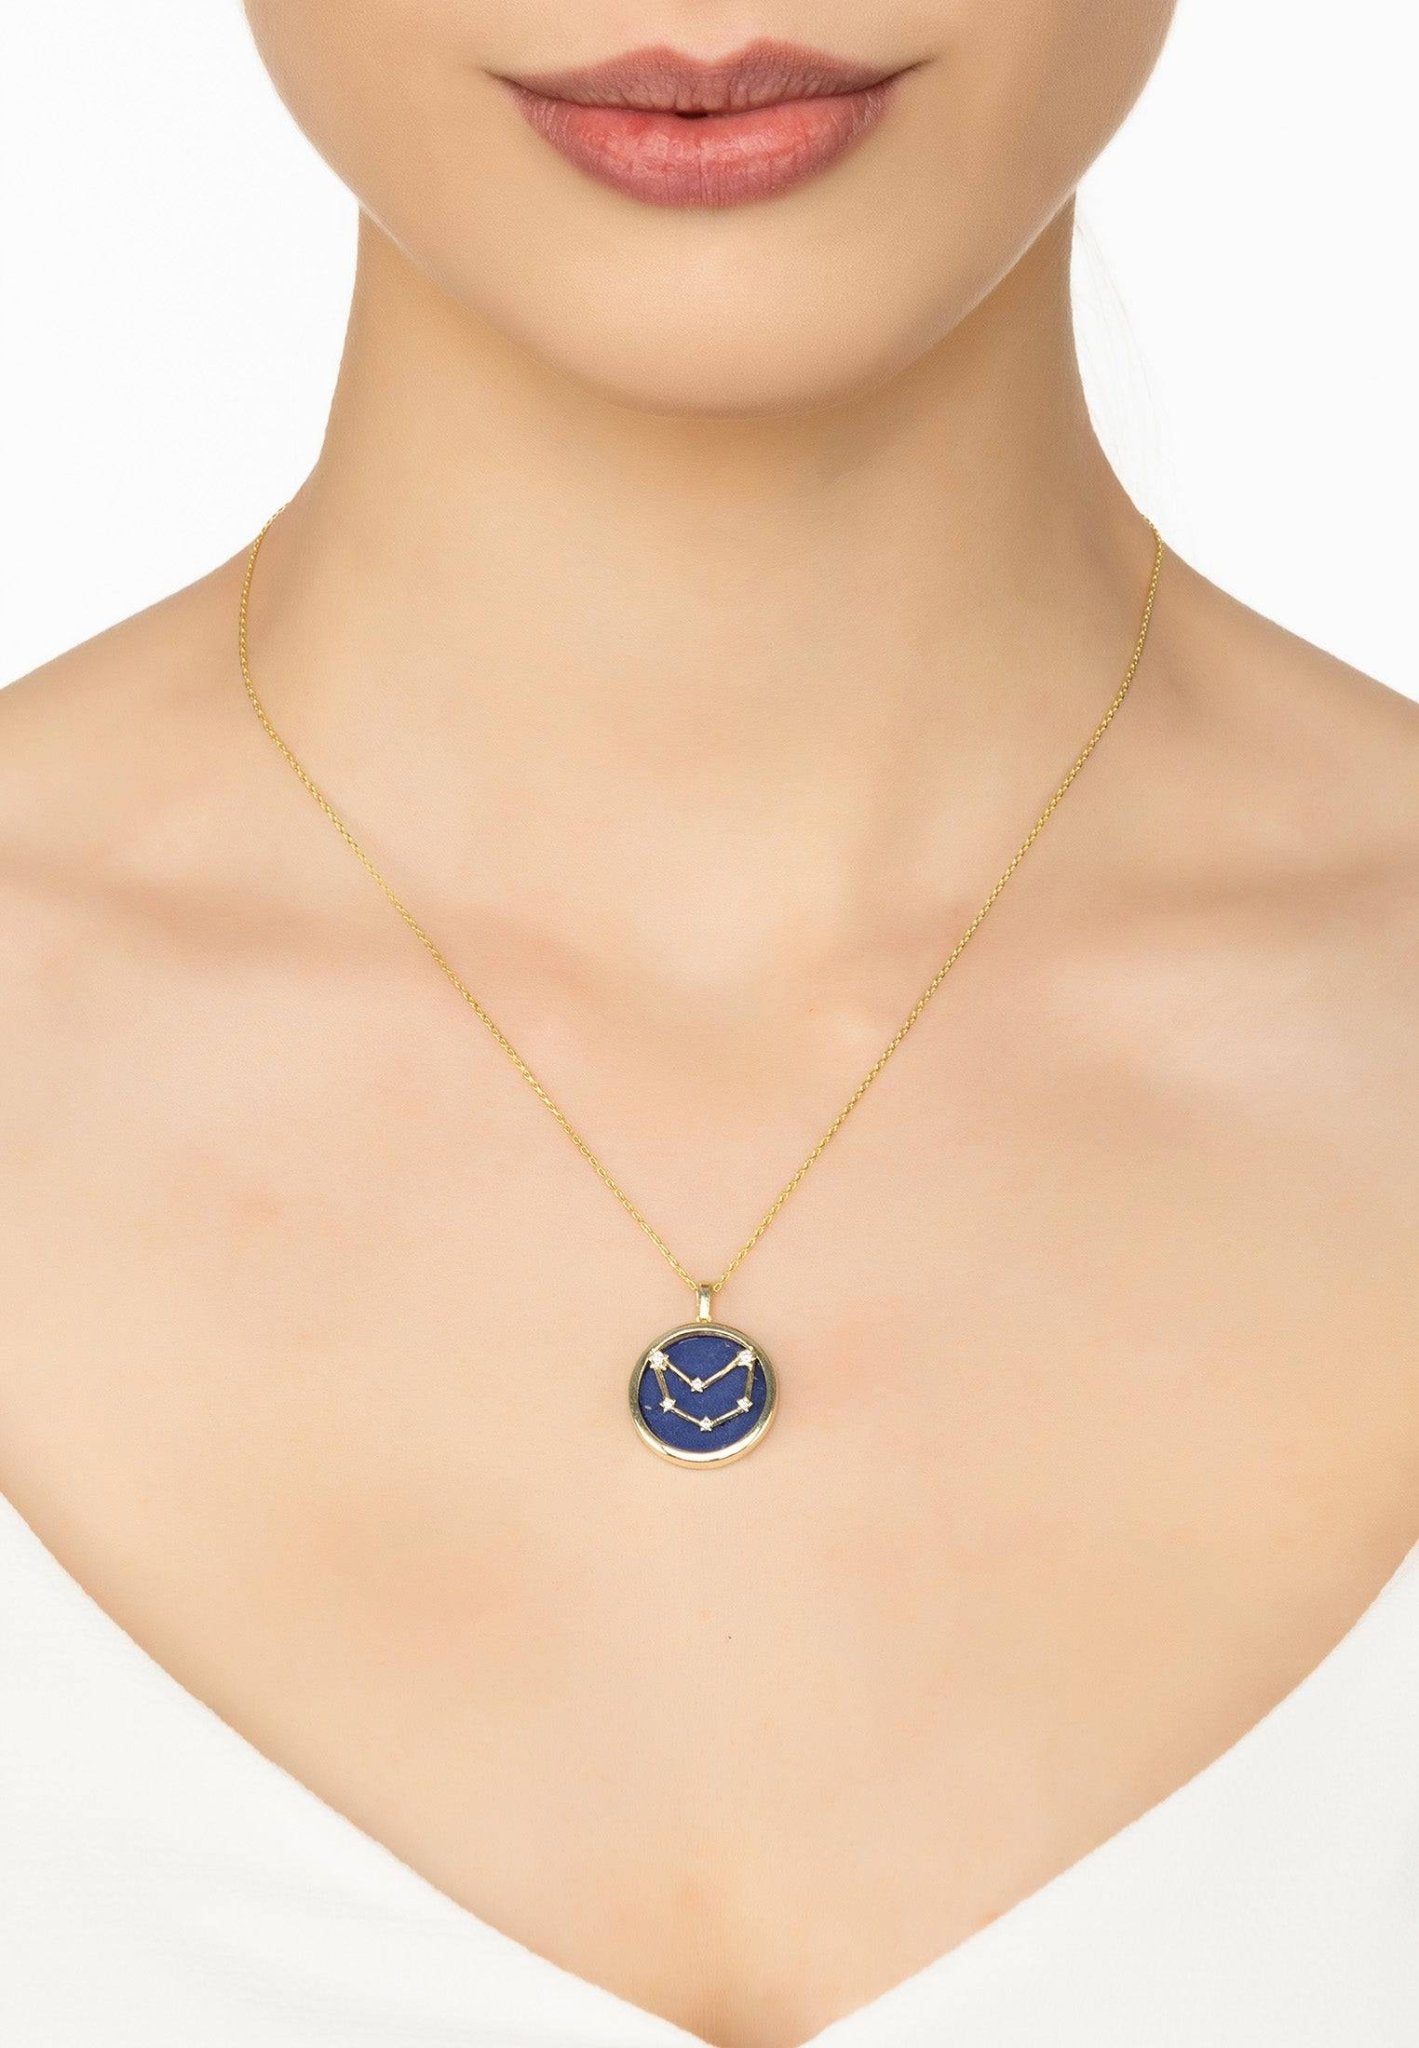 Personalized Necklaces - Zodiac Lapis Lazuli Constellation Pendant Necklace Gold Capricorn 